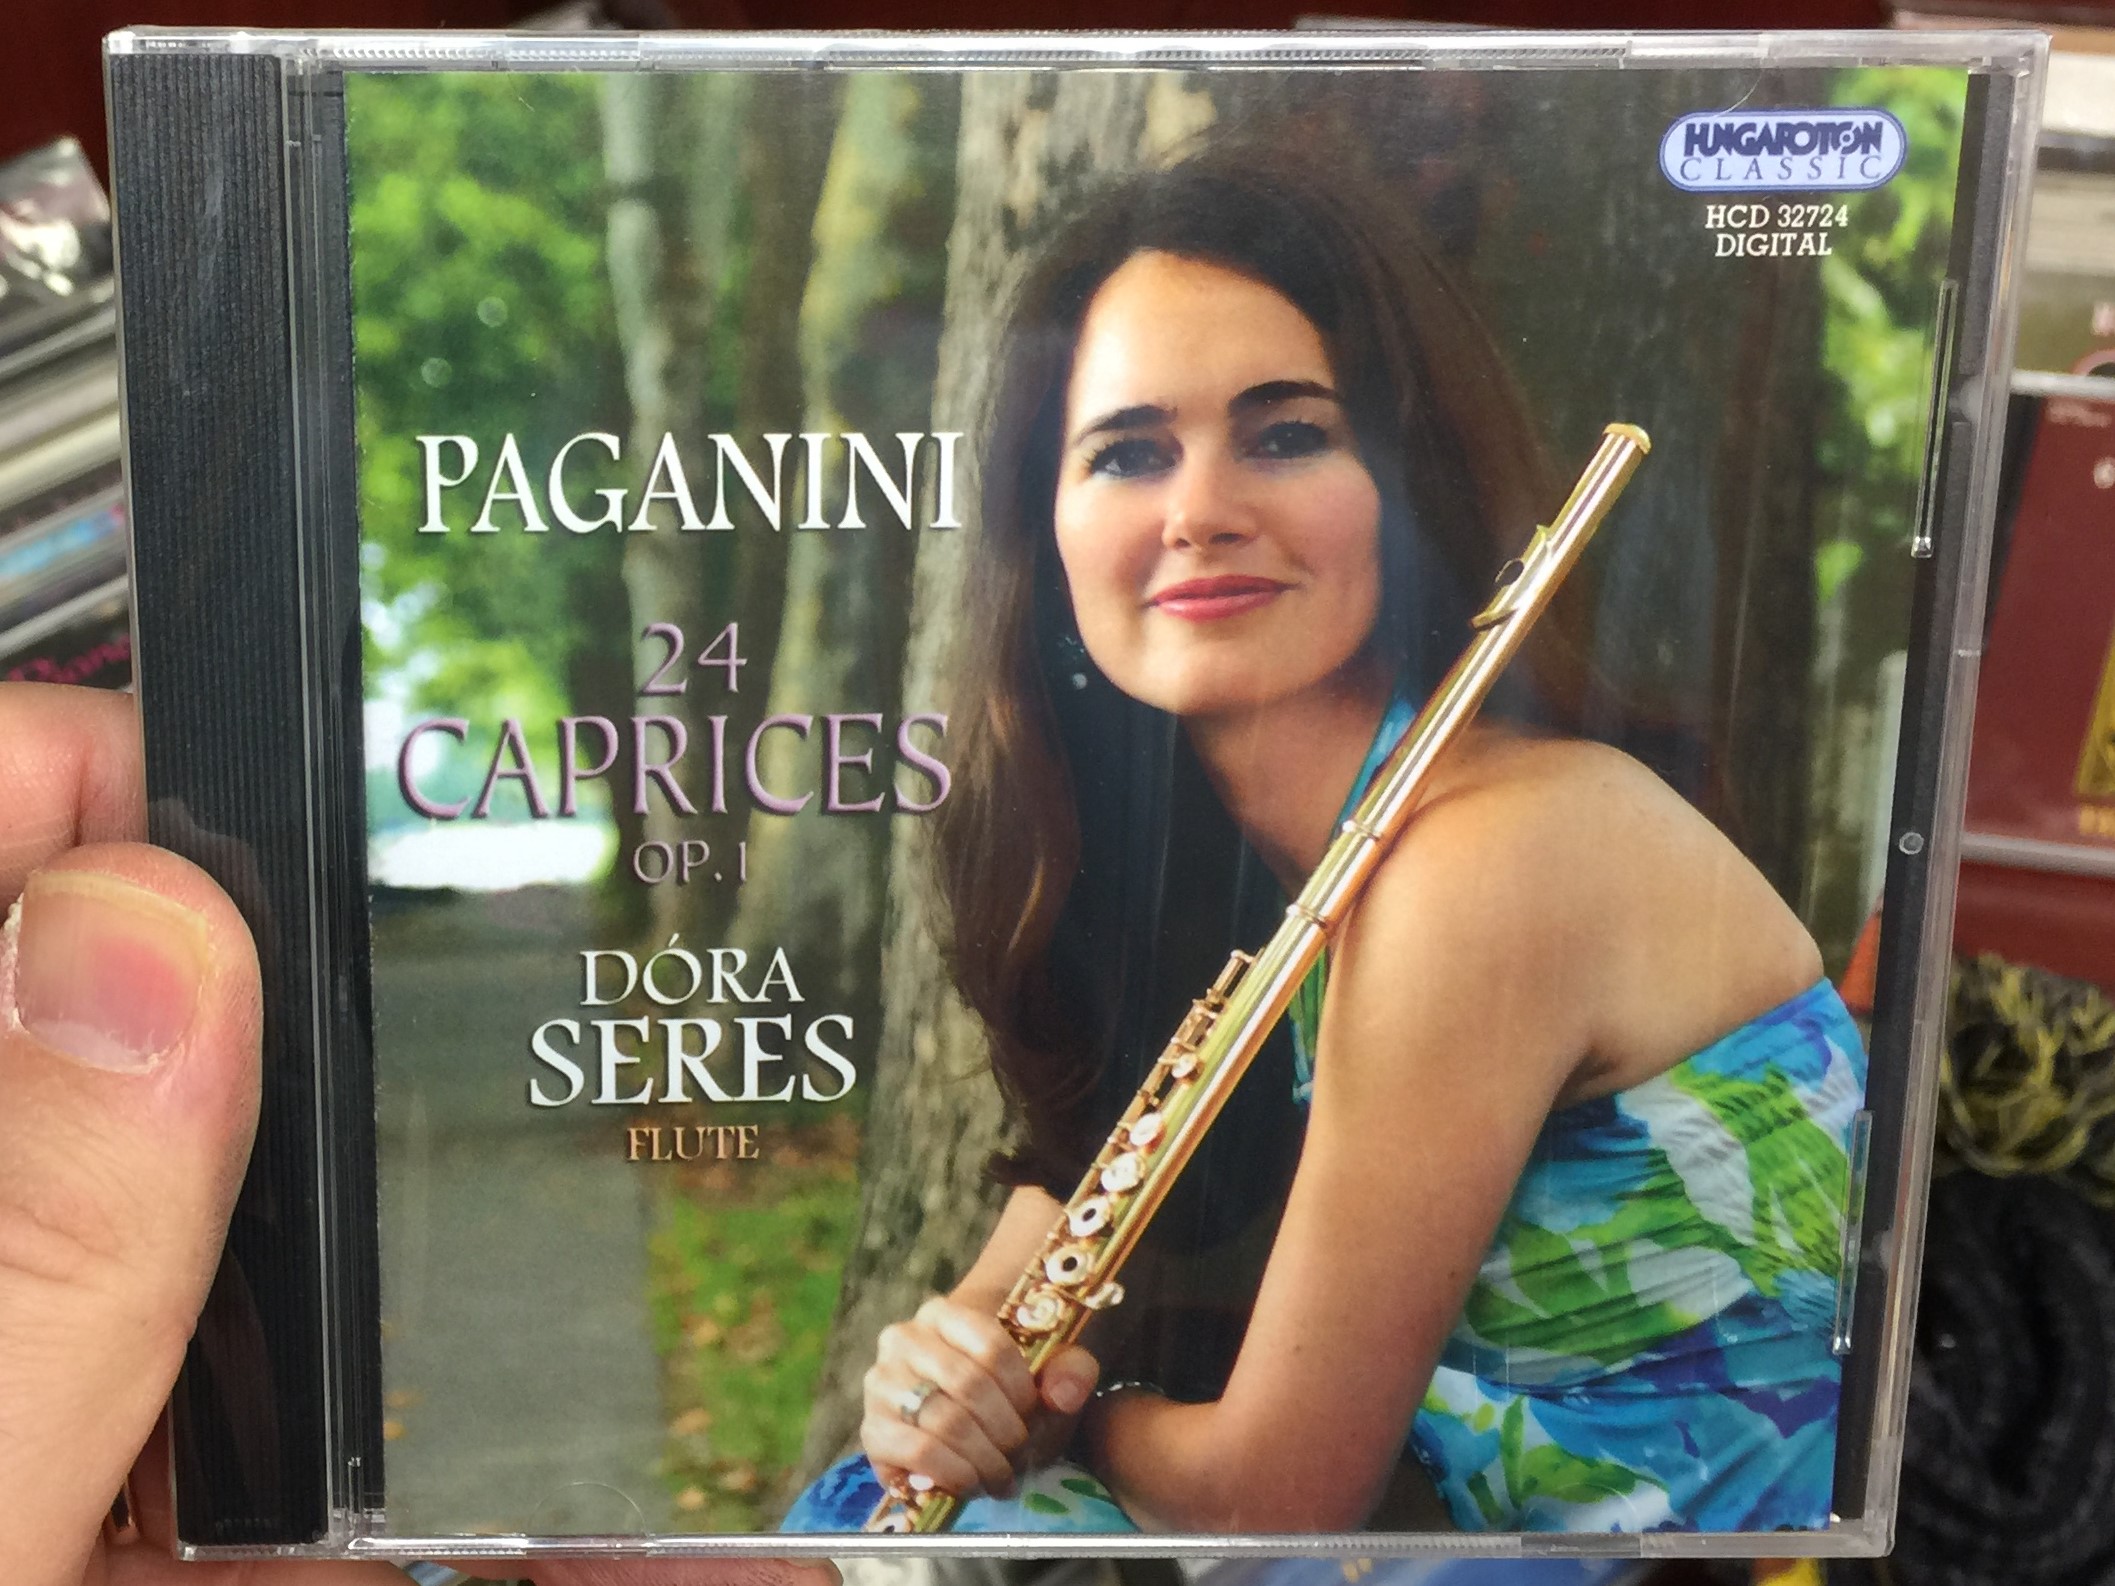 paganini-24-caprices-op.-1-d-ra-seres-flute-hungaroton-classic-audio-cd-2012-stereo-hcd-32724-1-.jpg